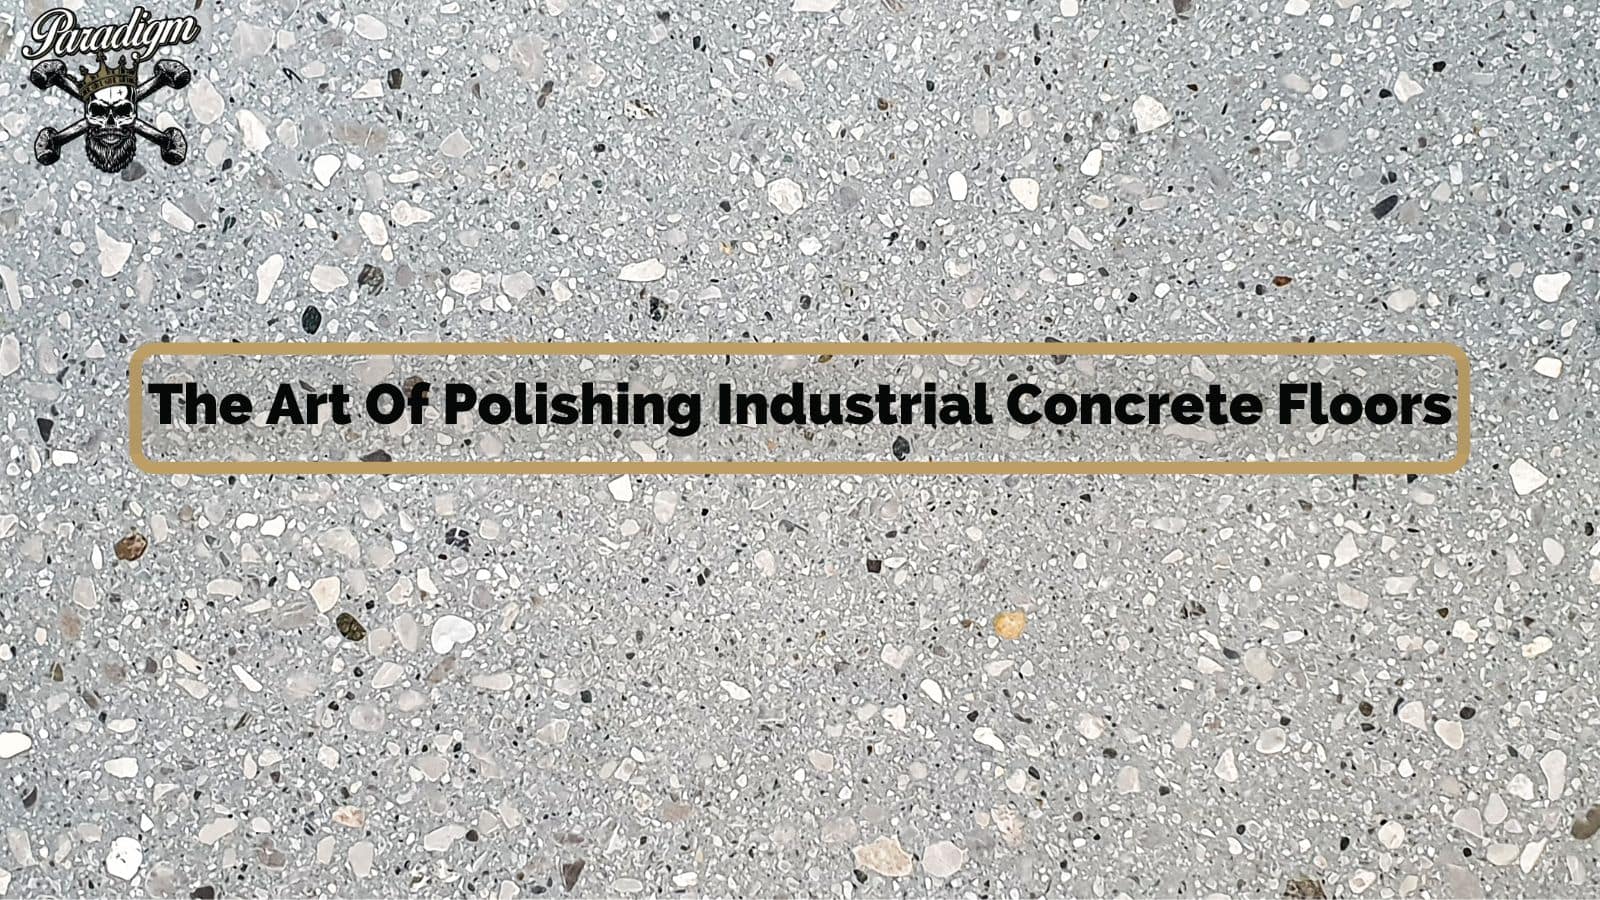 Polishing Industrial Concrete Floors